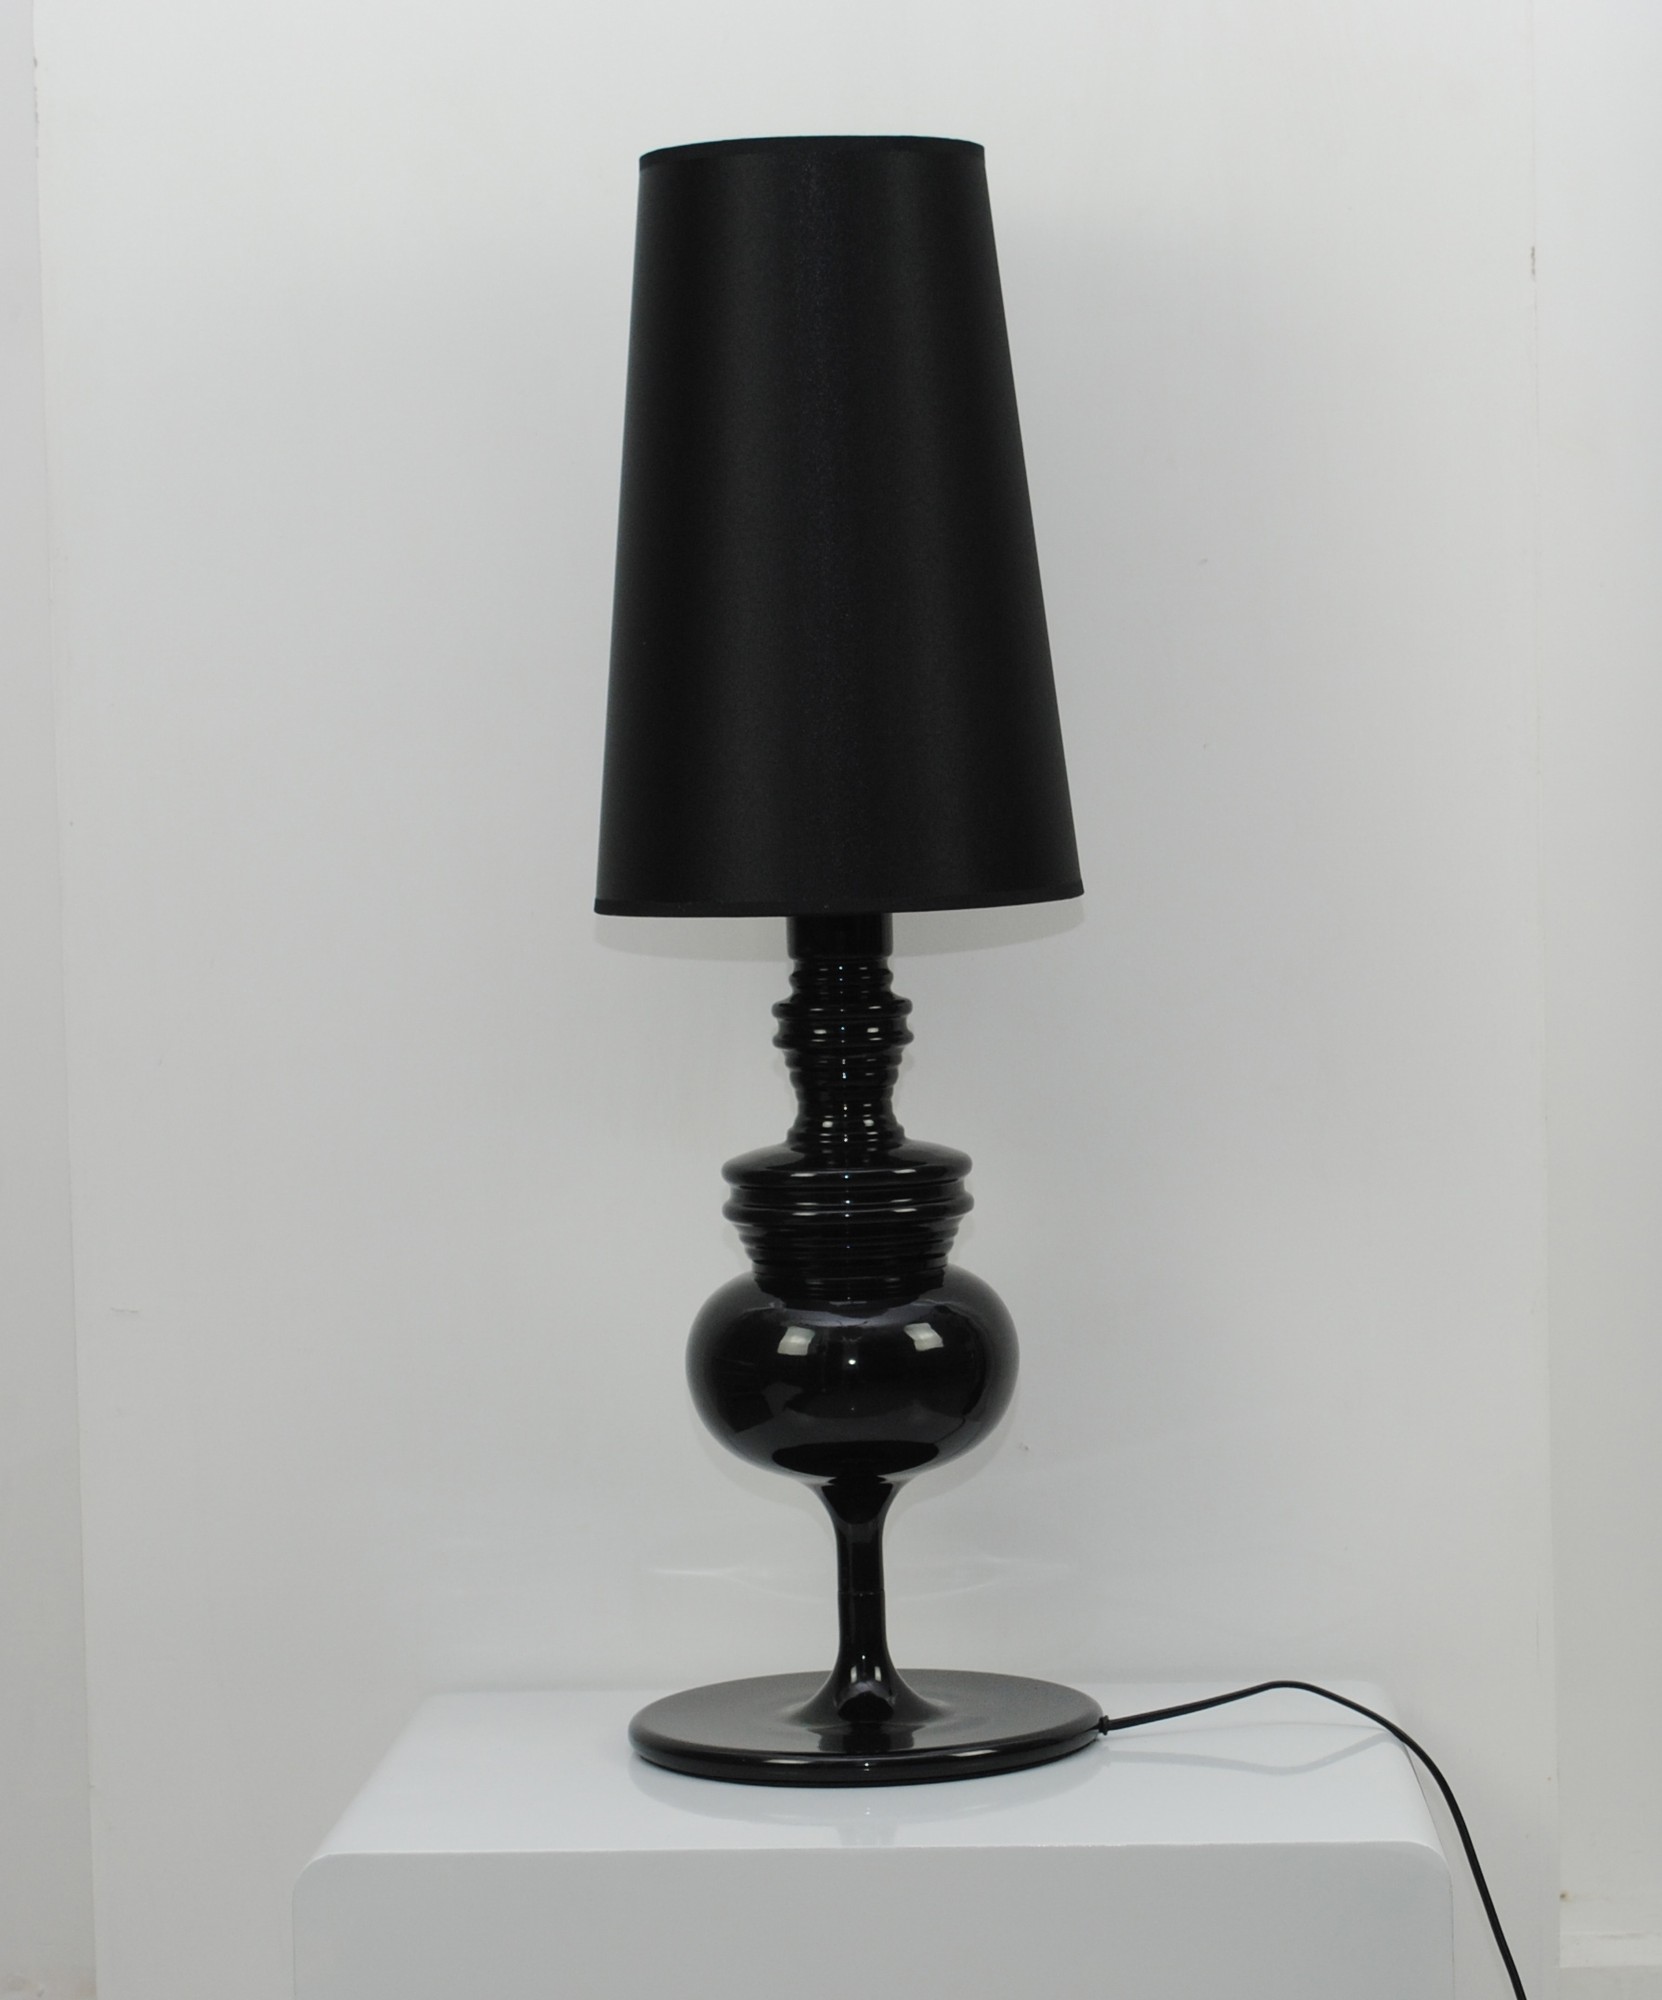 7" X 7" X 22" Black Carbon Steel Table Lamp